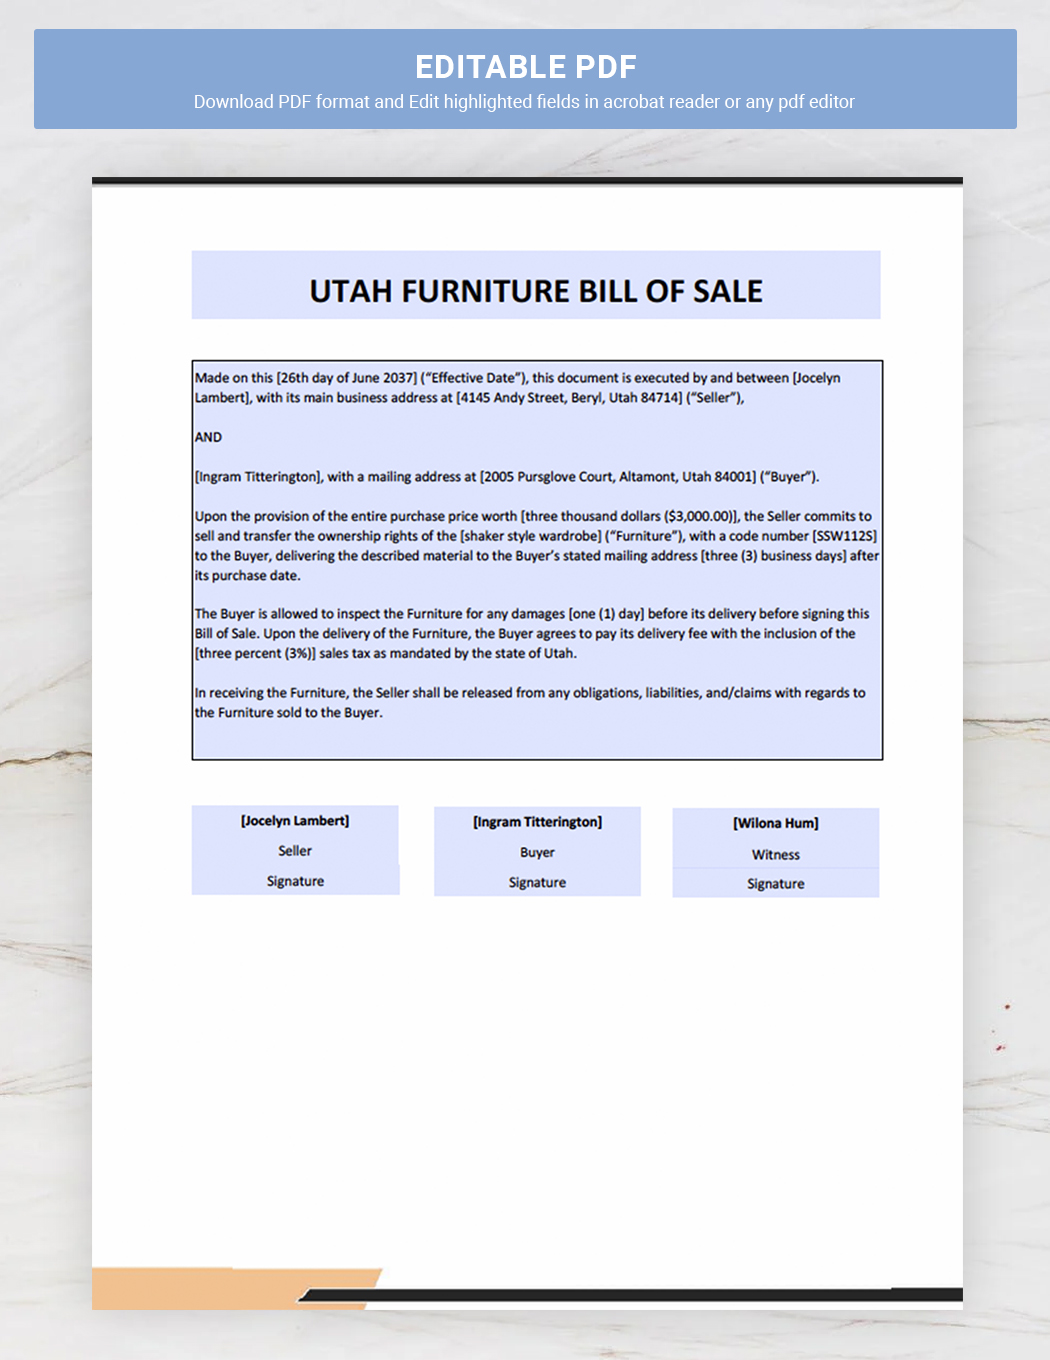 Utah Furniture Bill of Sale Form Template